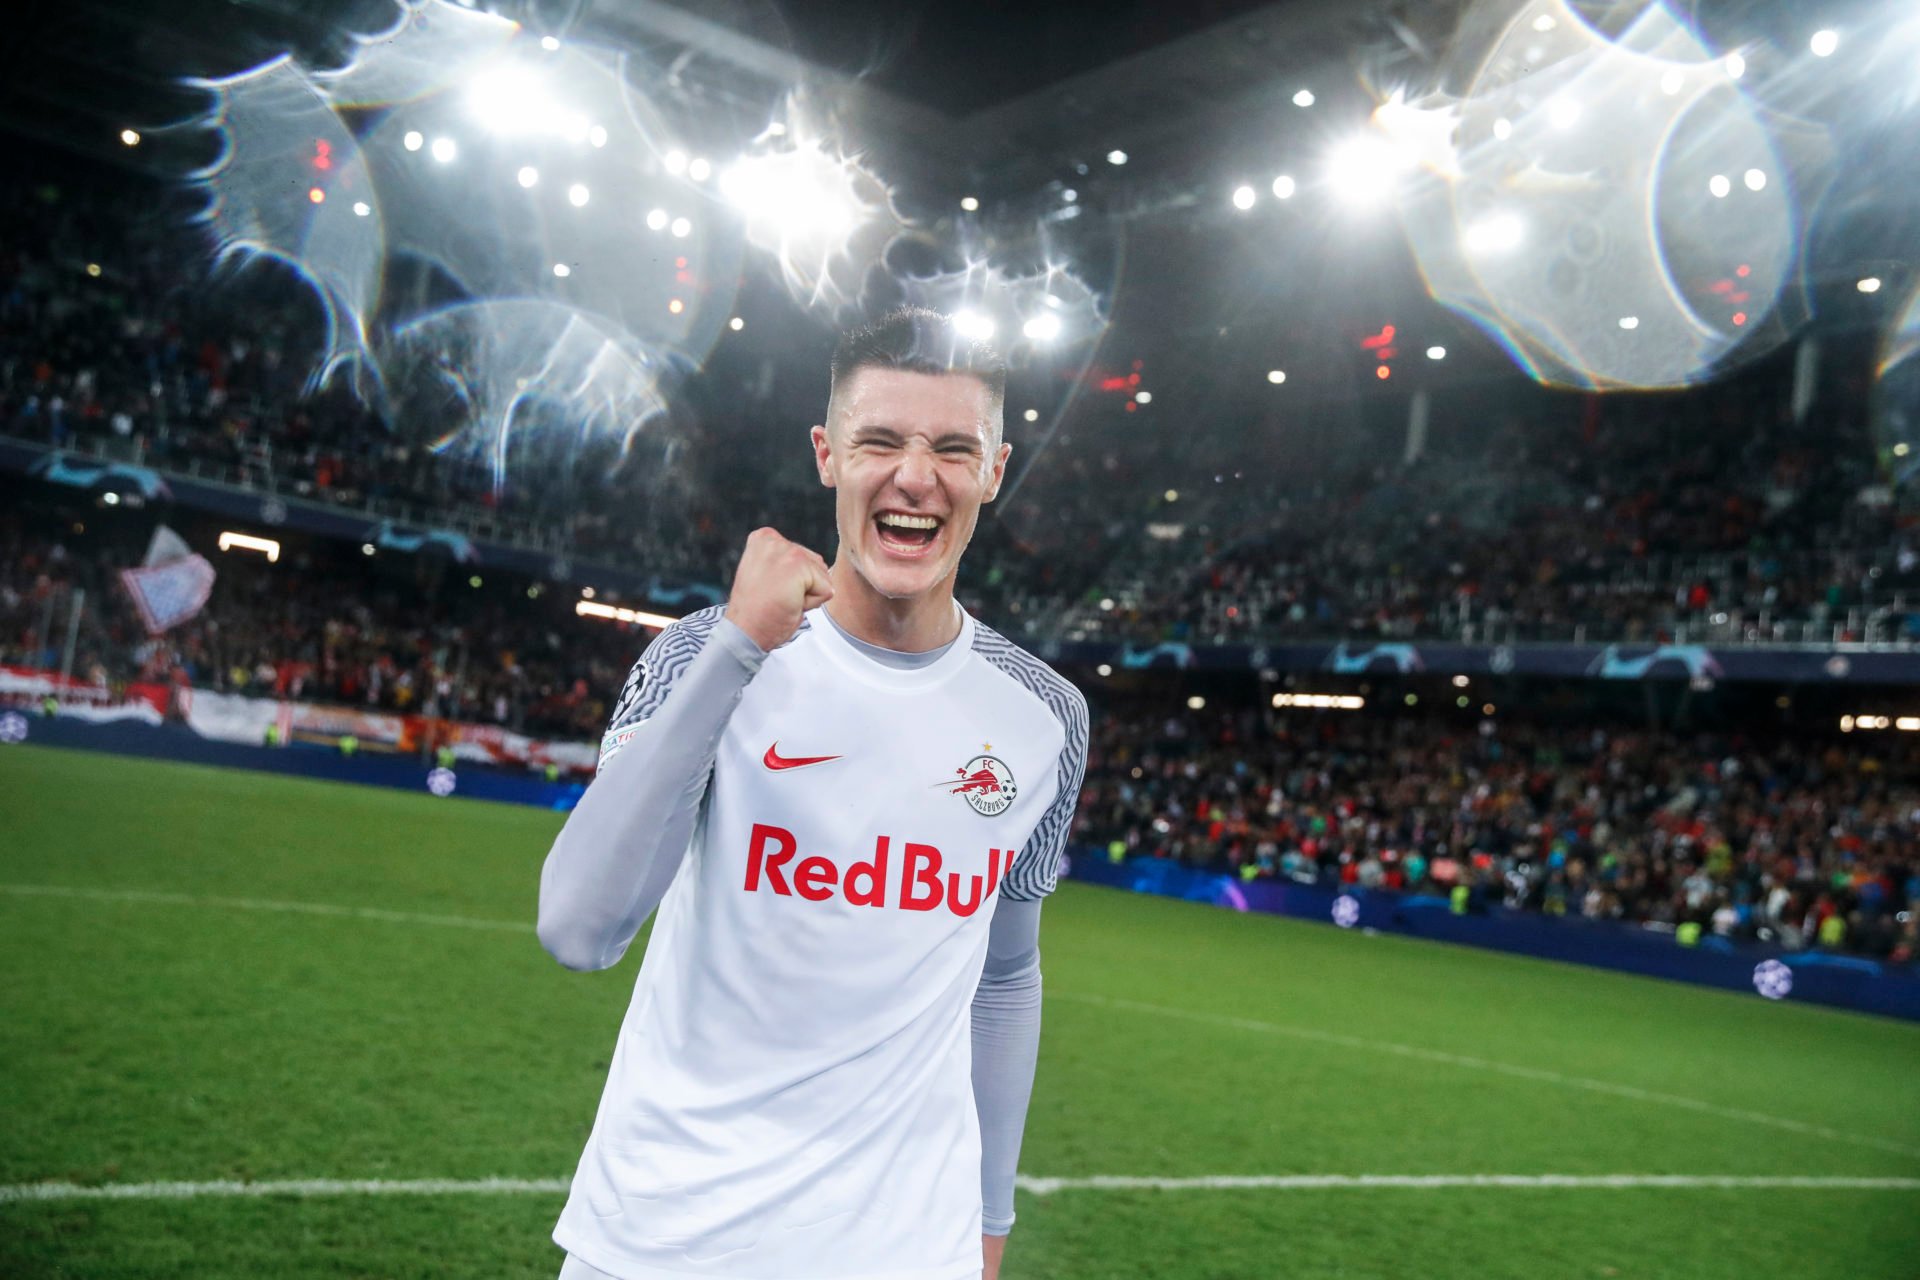 Benjamin Sesko unveiled as RB Leipzig player after United links